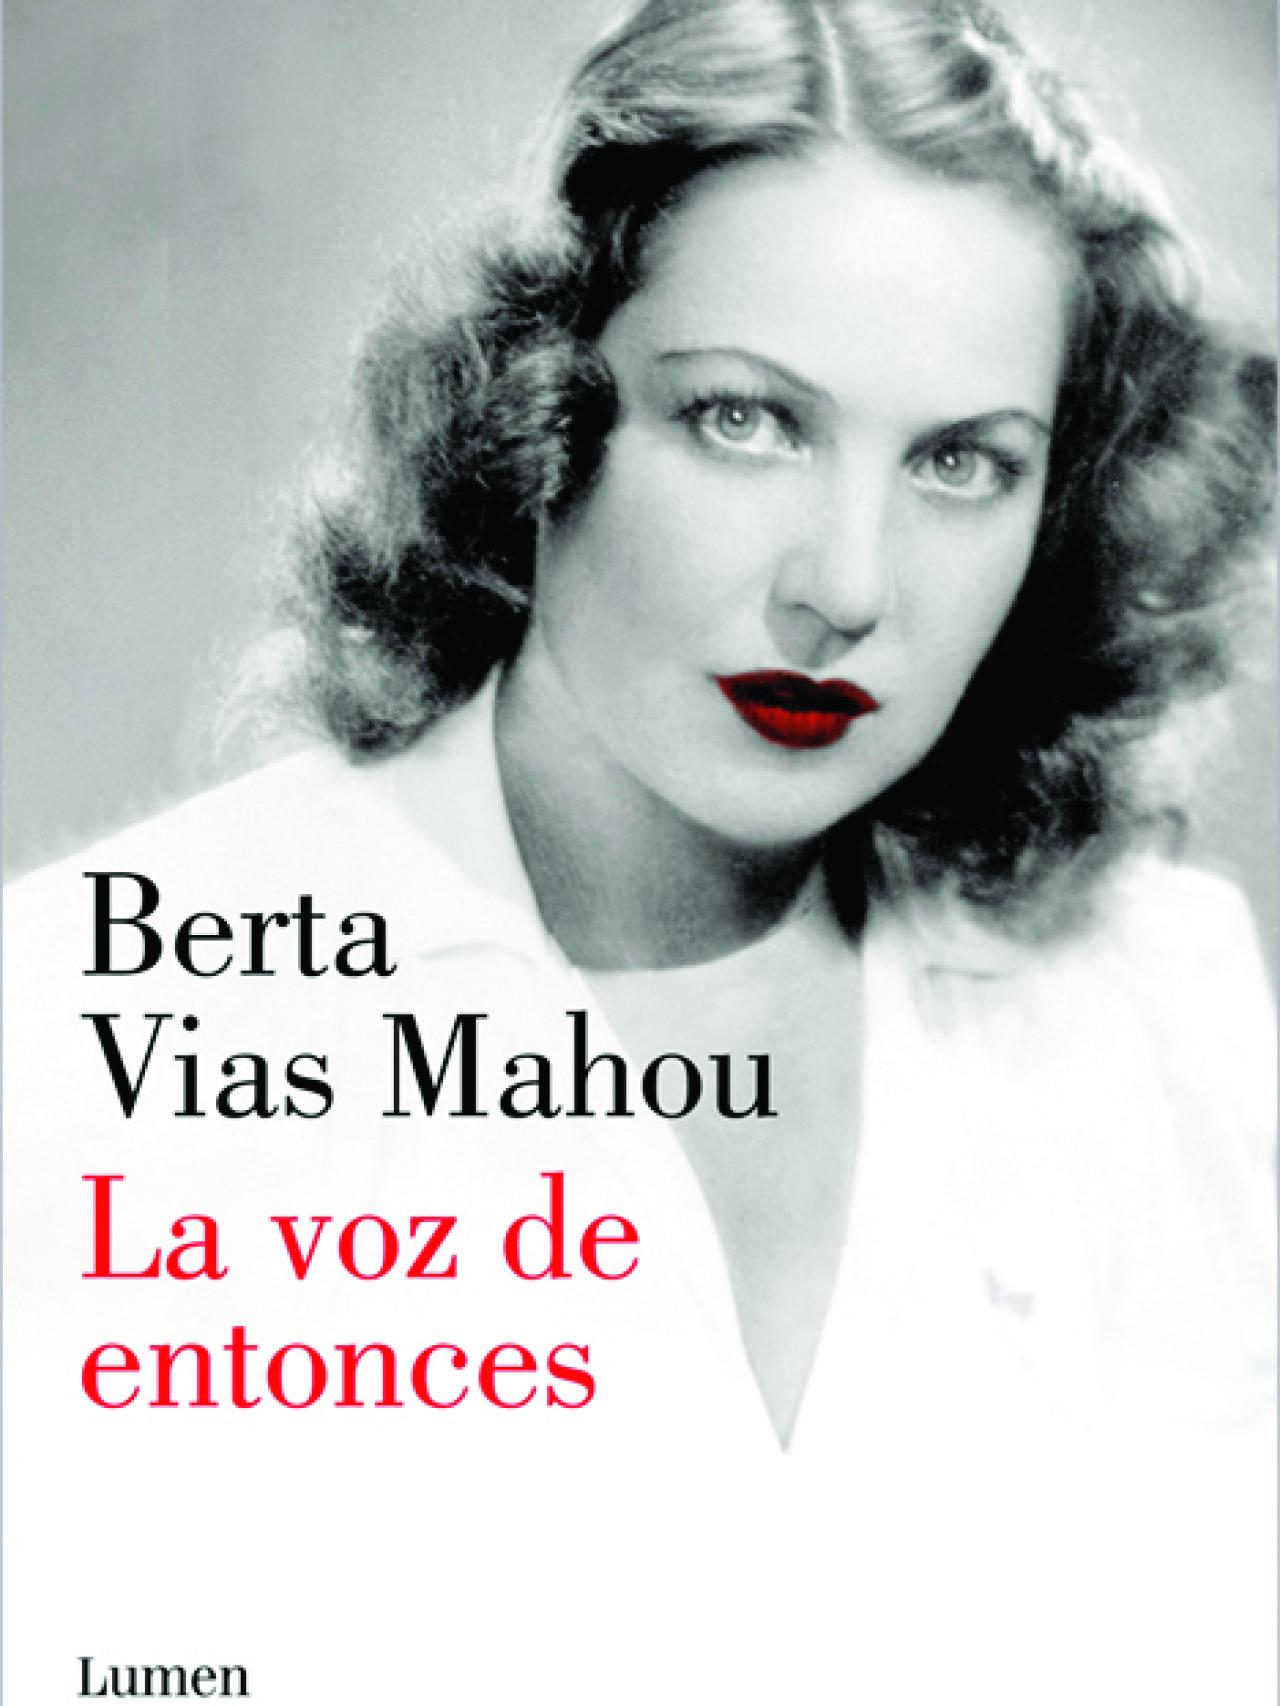 'La voz de entonces', de Berta Vias Mahou